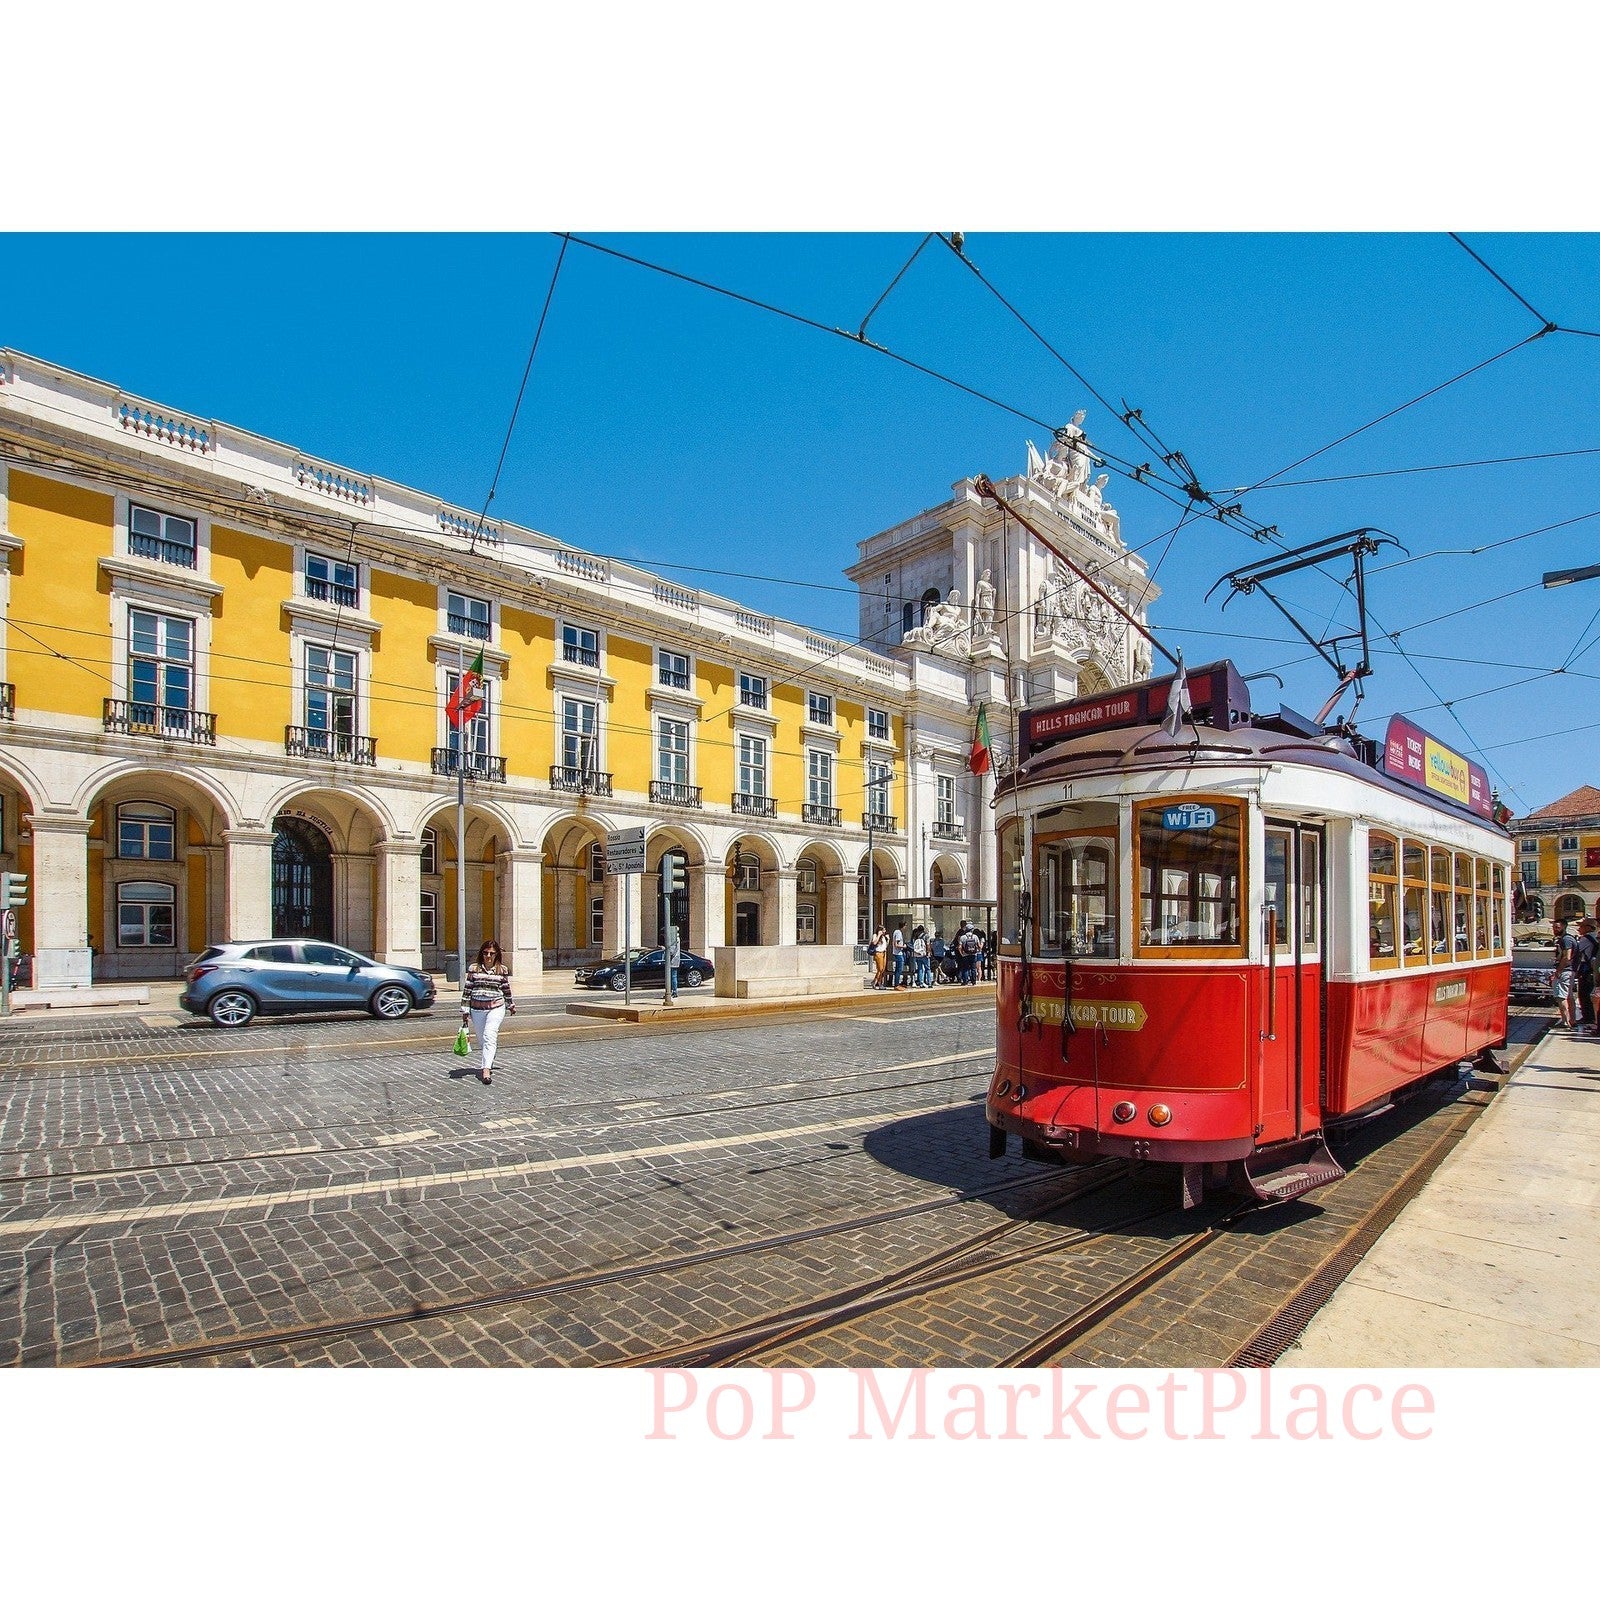 Portugal Golden Visa Real Estate Investment Global Reality Ltd